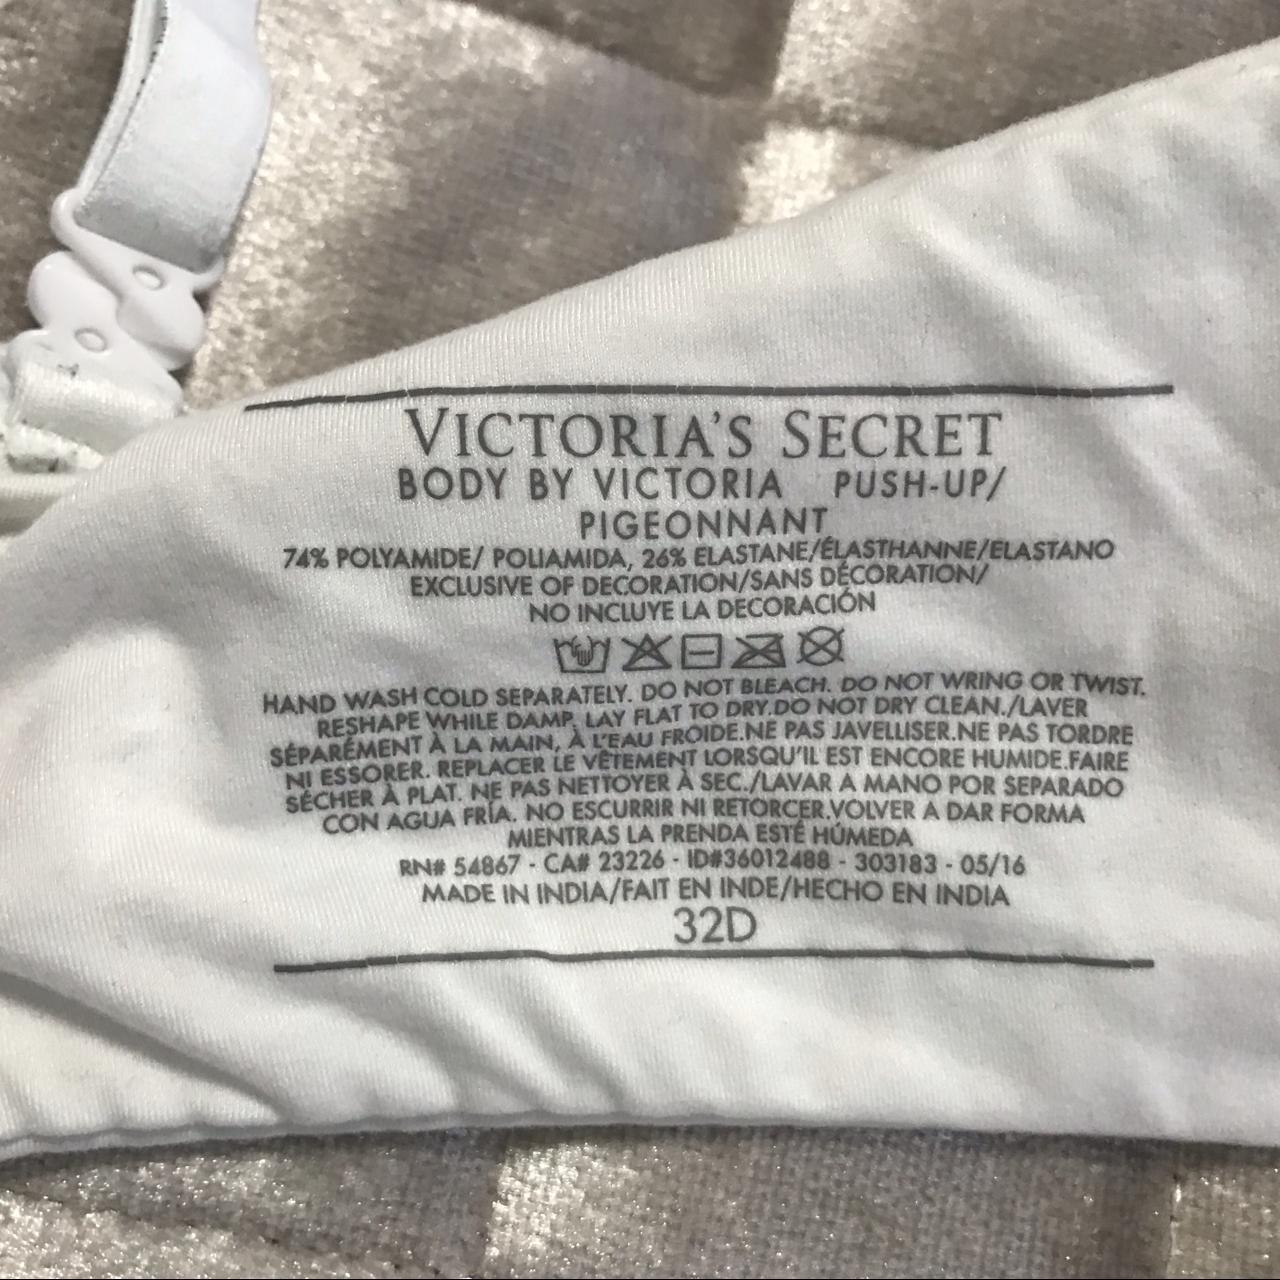 Victoria’s Secret body by Victoria push up bra in